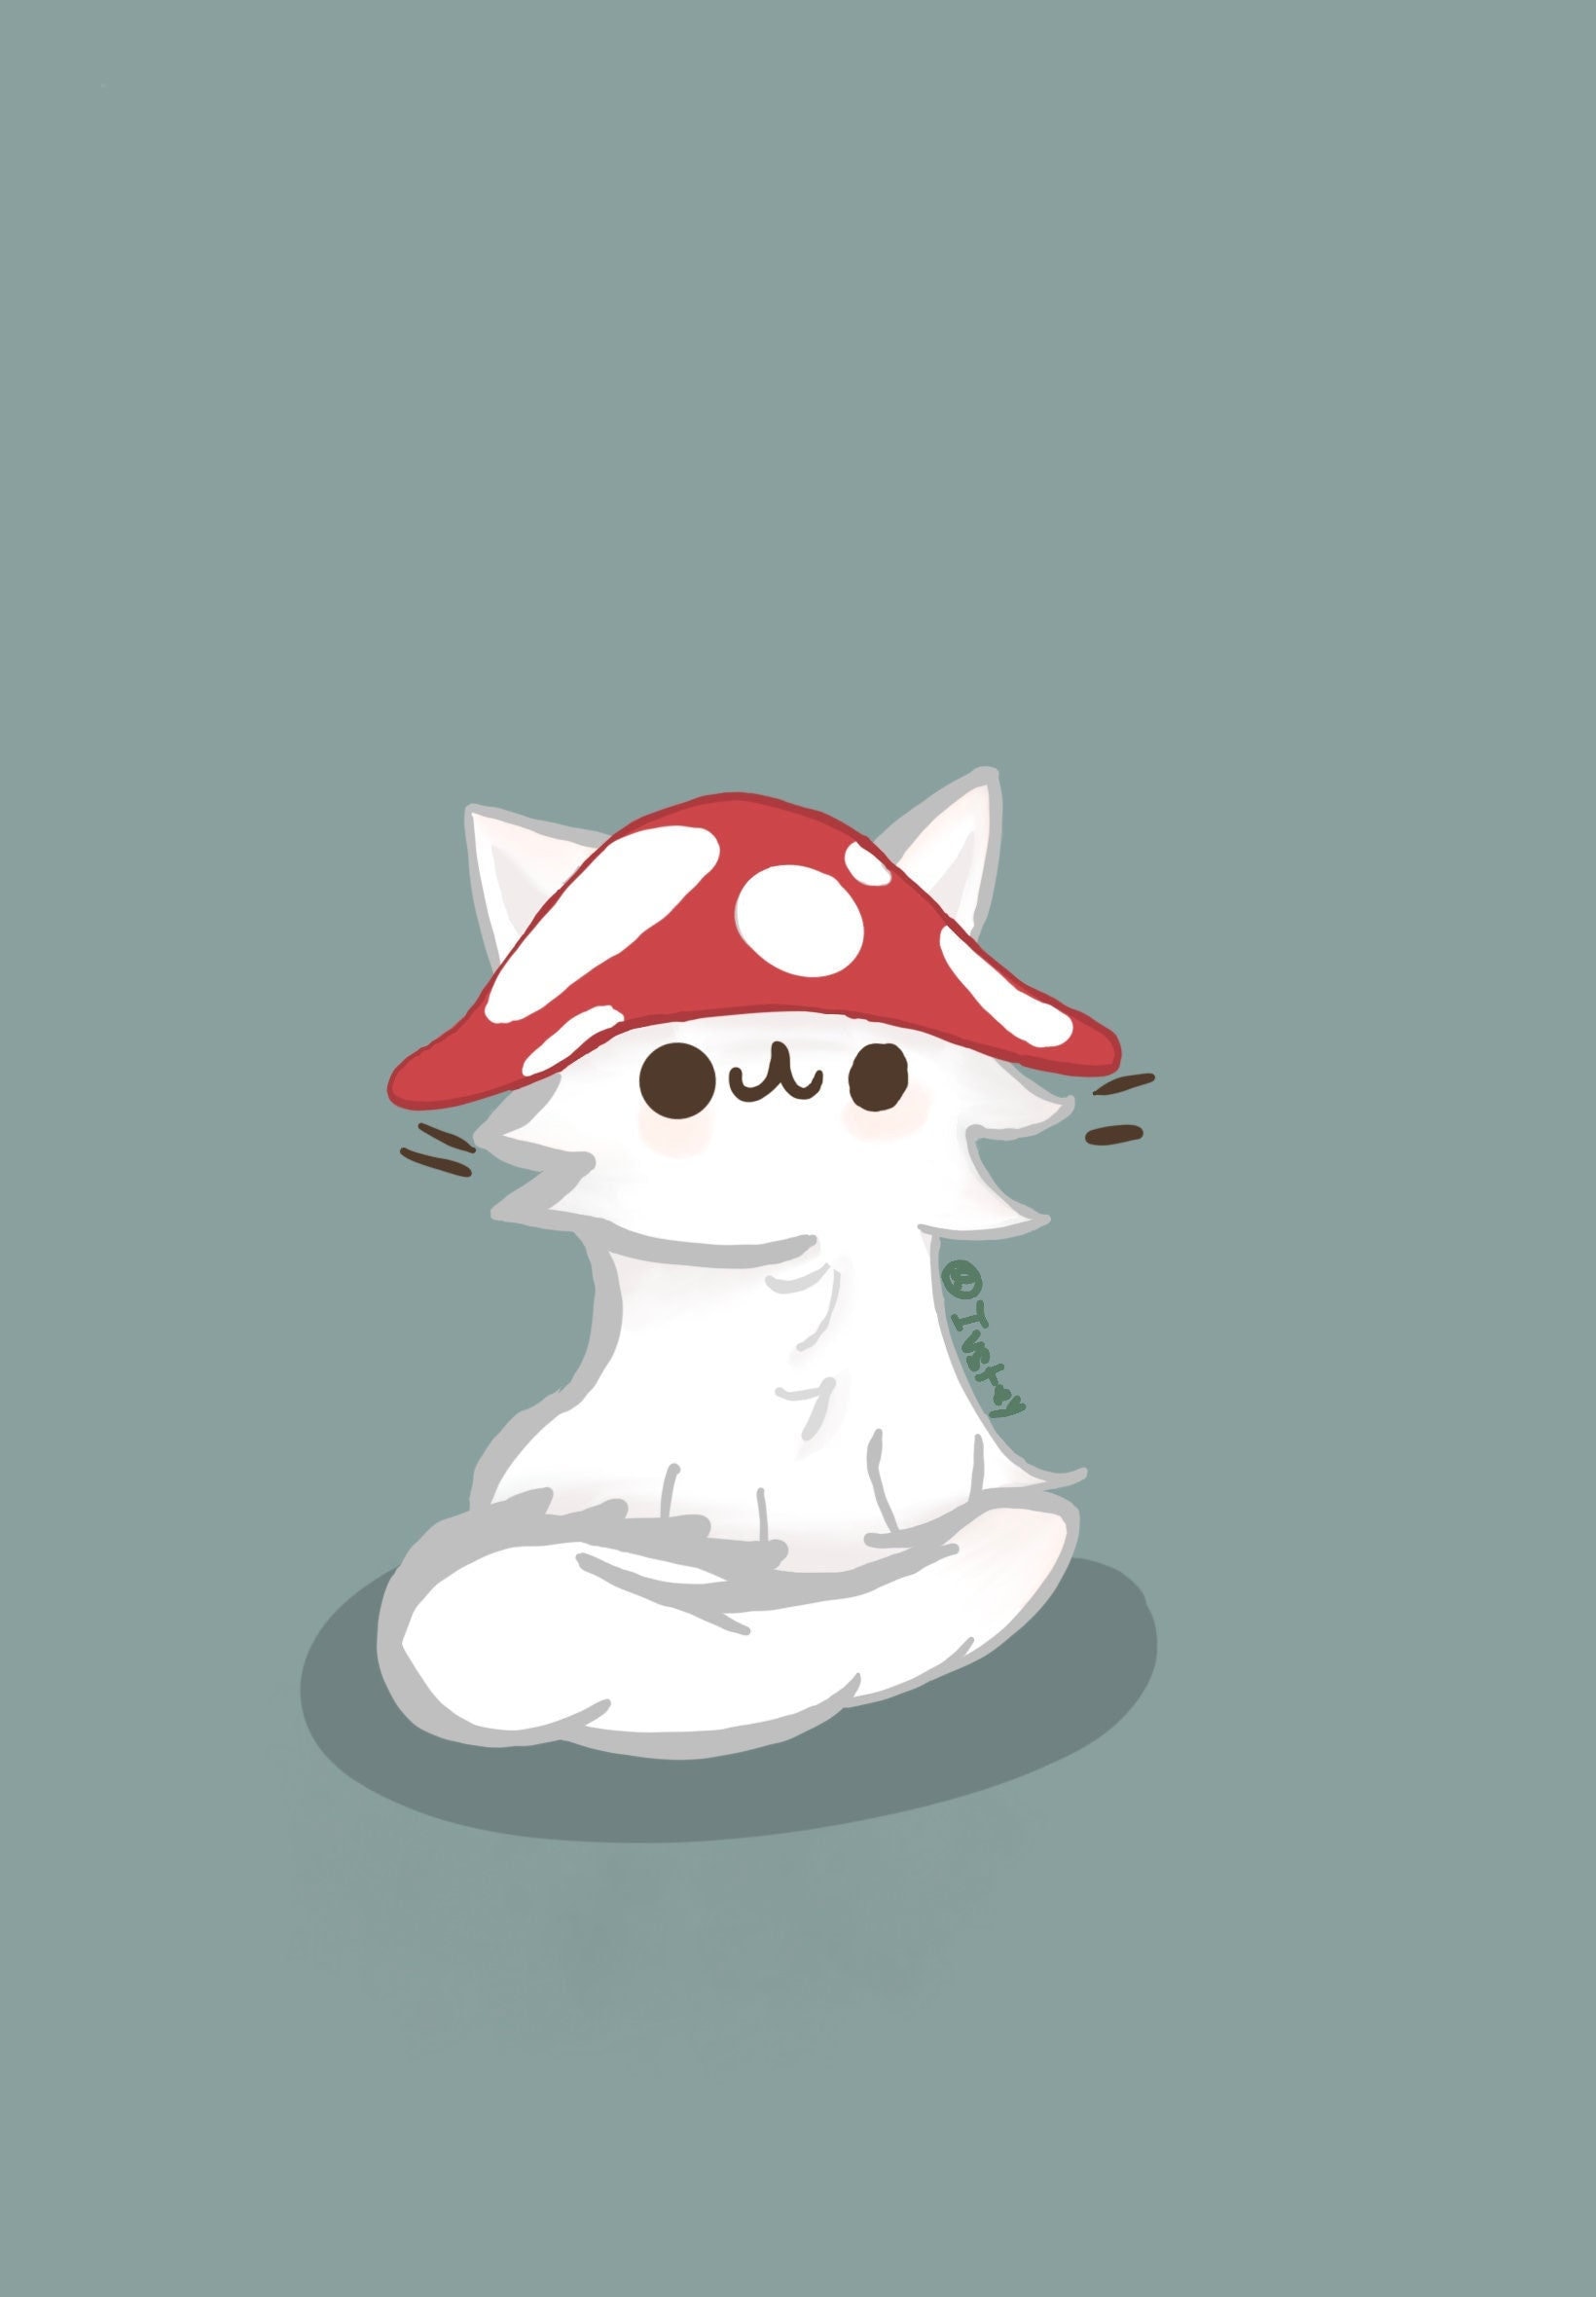 Mushroom Cat Wallpaper Printable Download :3 - Etsy